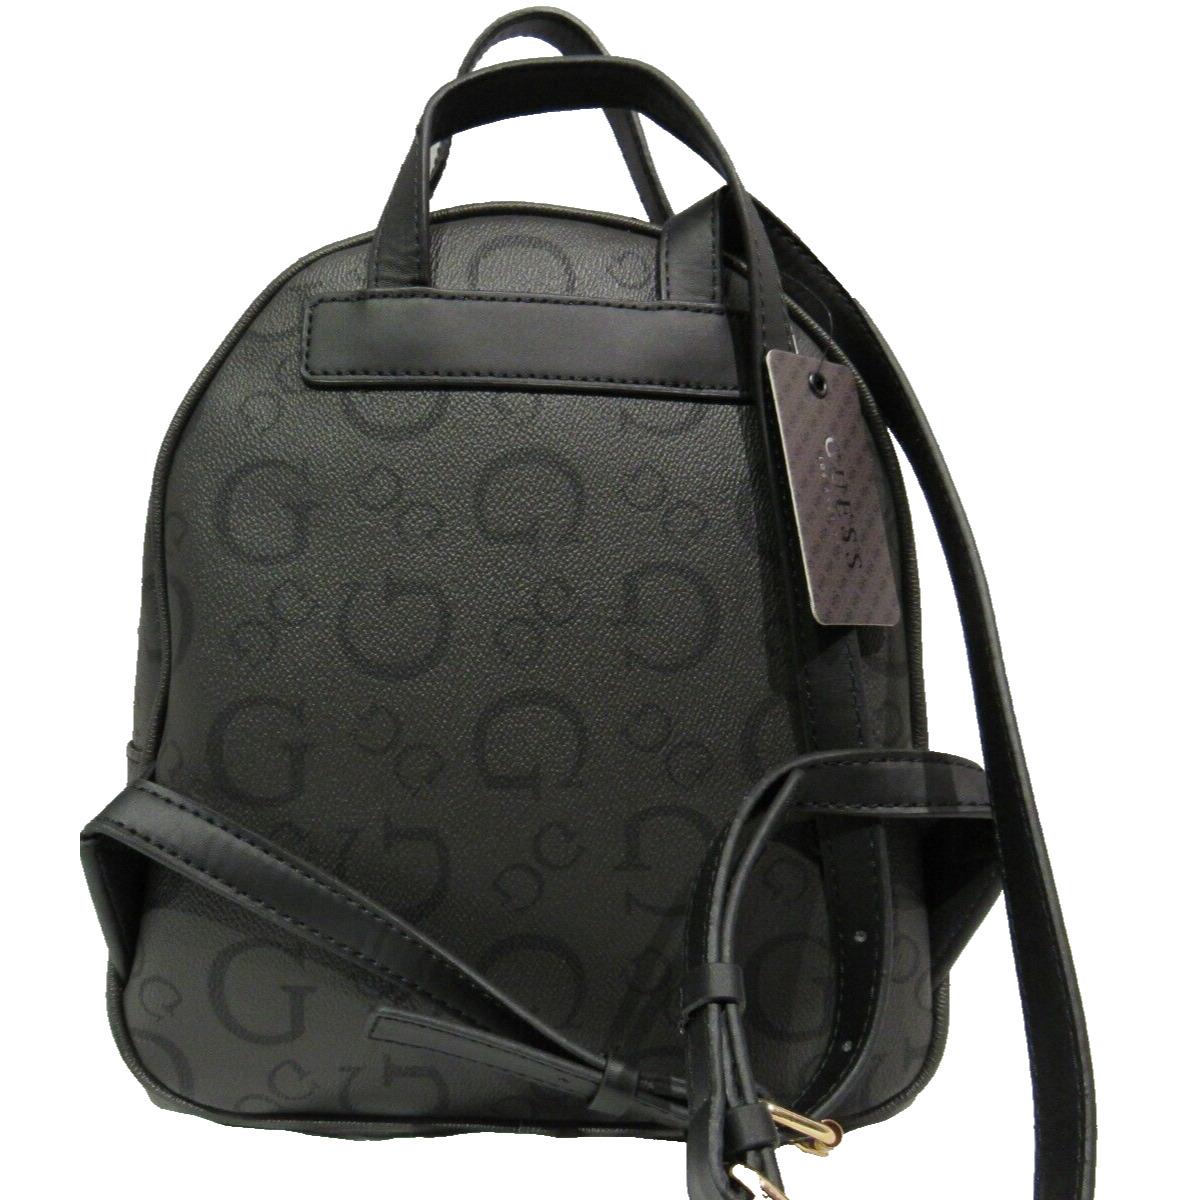 Guess Backpack Hand/shoulder Bag Maxina in Coal Free US Shipping - Hardware: Gold, Exterior: Coal Black